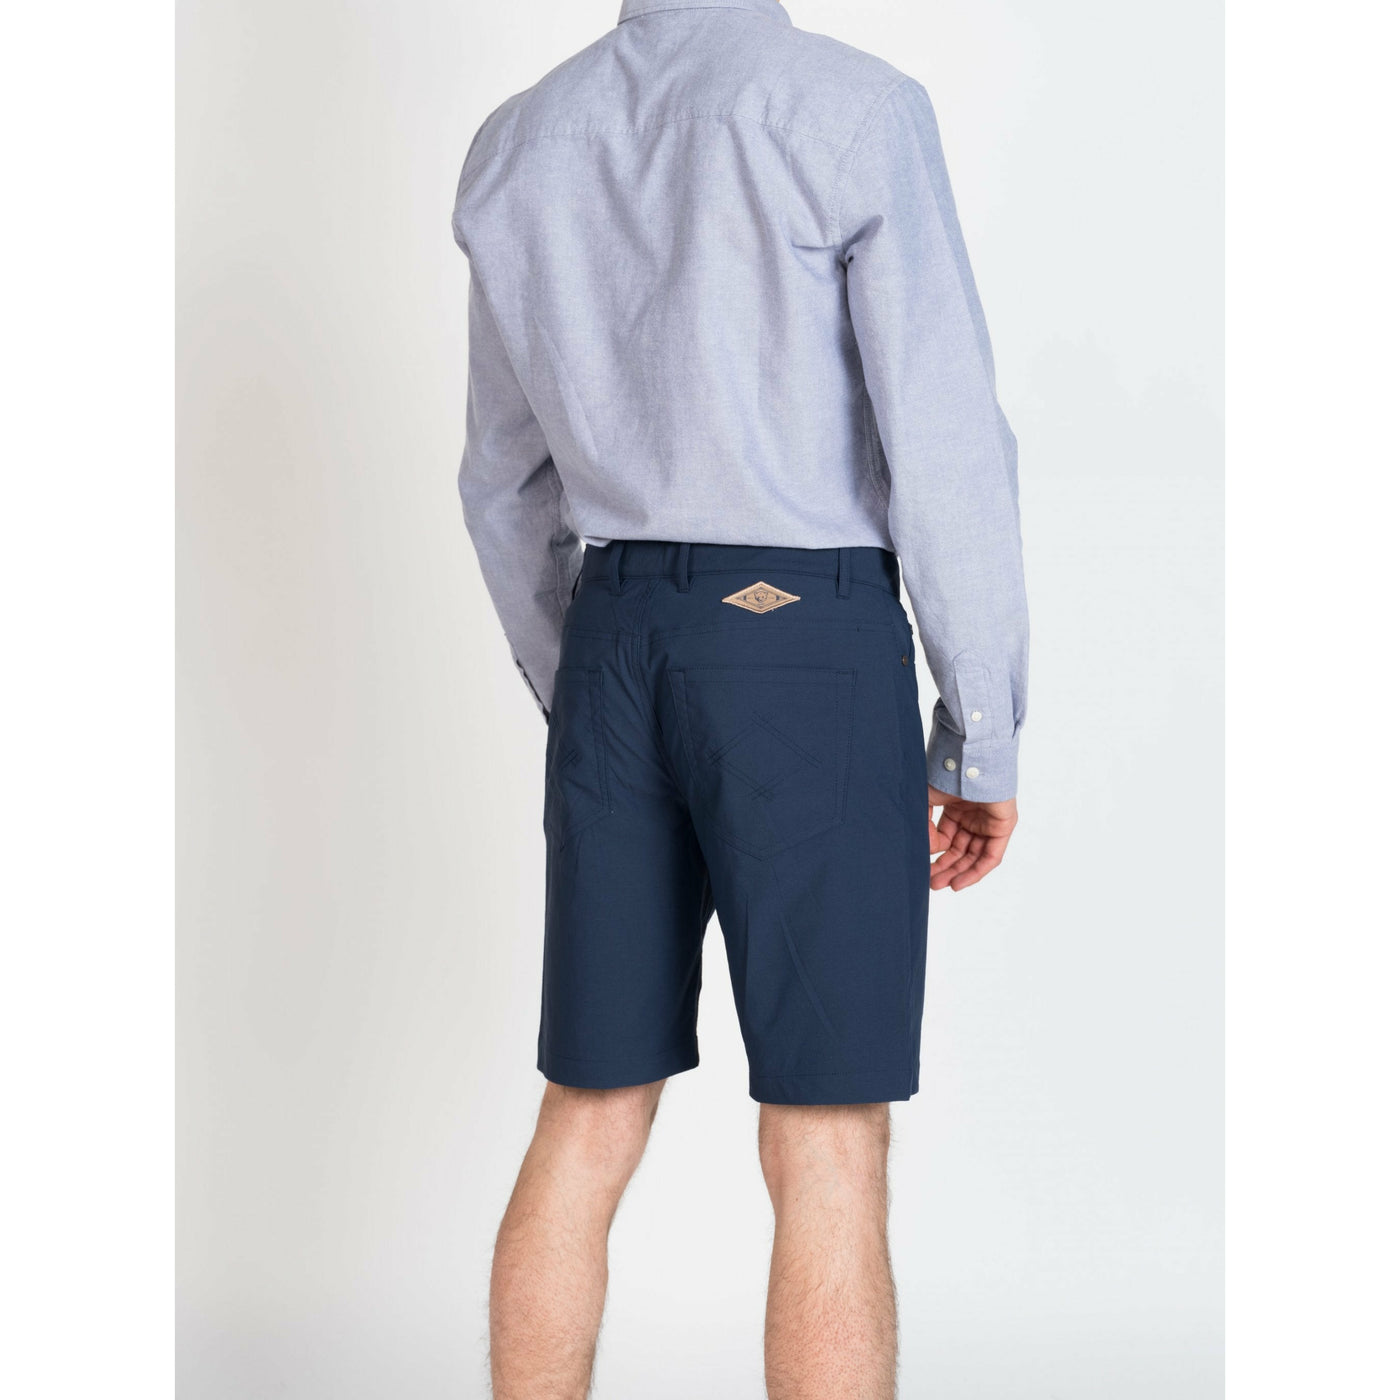 BREDDY'S - shorts New York Basic #farbe_dark-blue